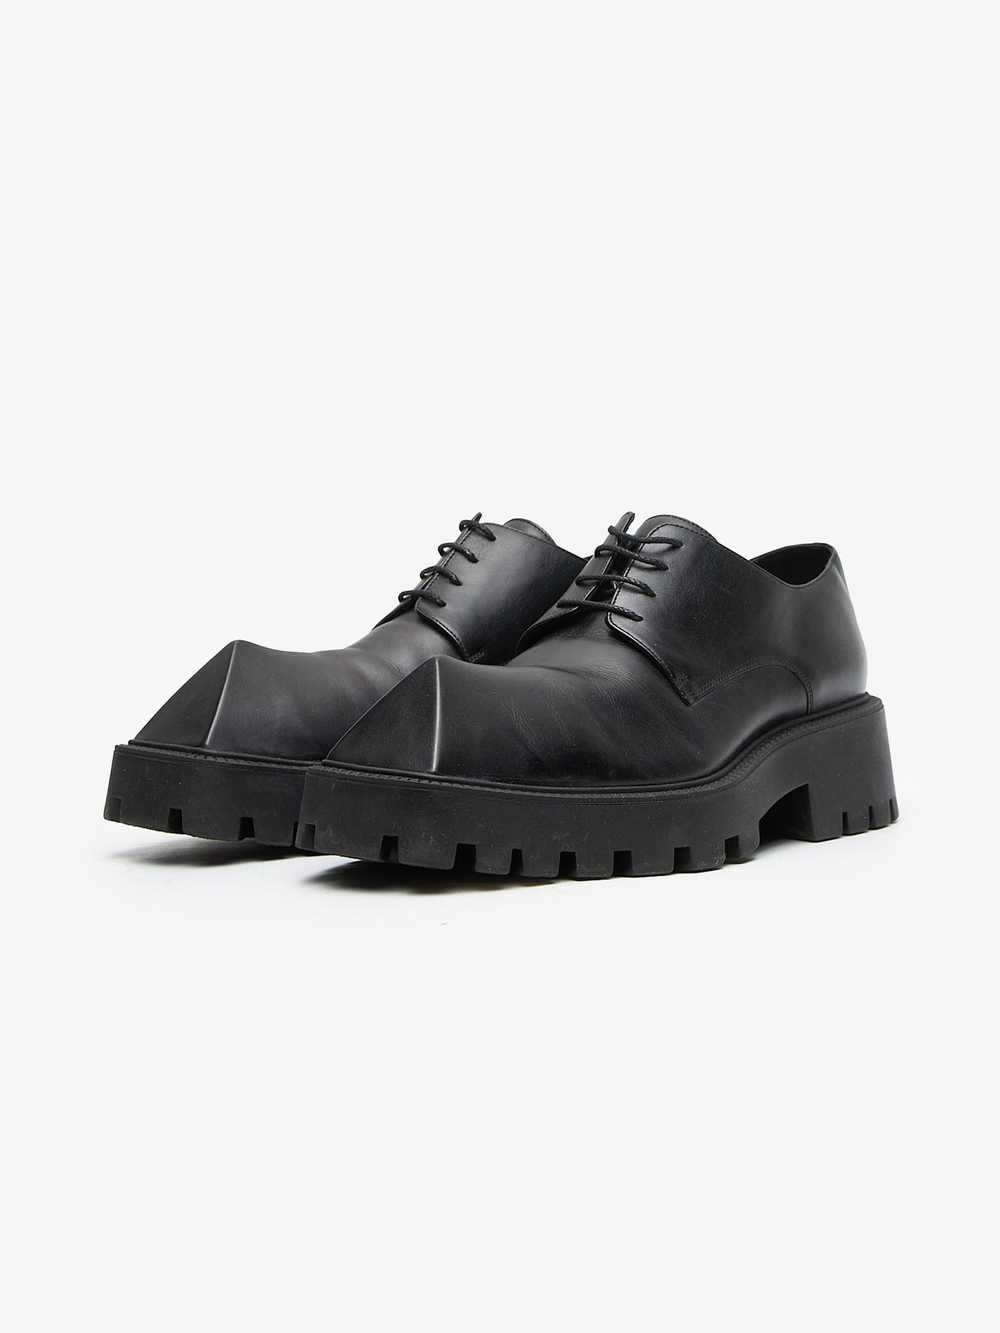 Balenciaga Black Rhino Leather Derby Shoes - image 2